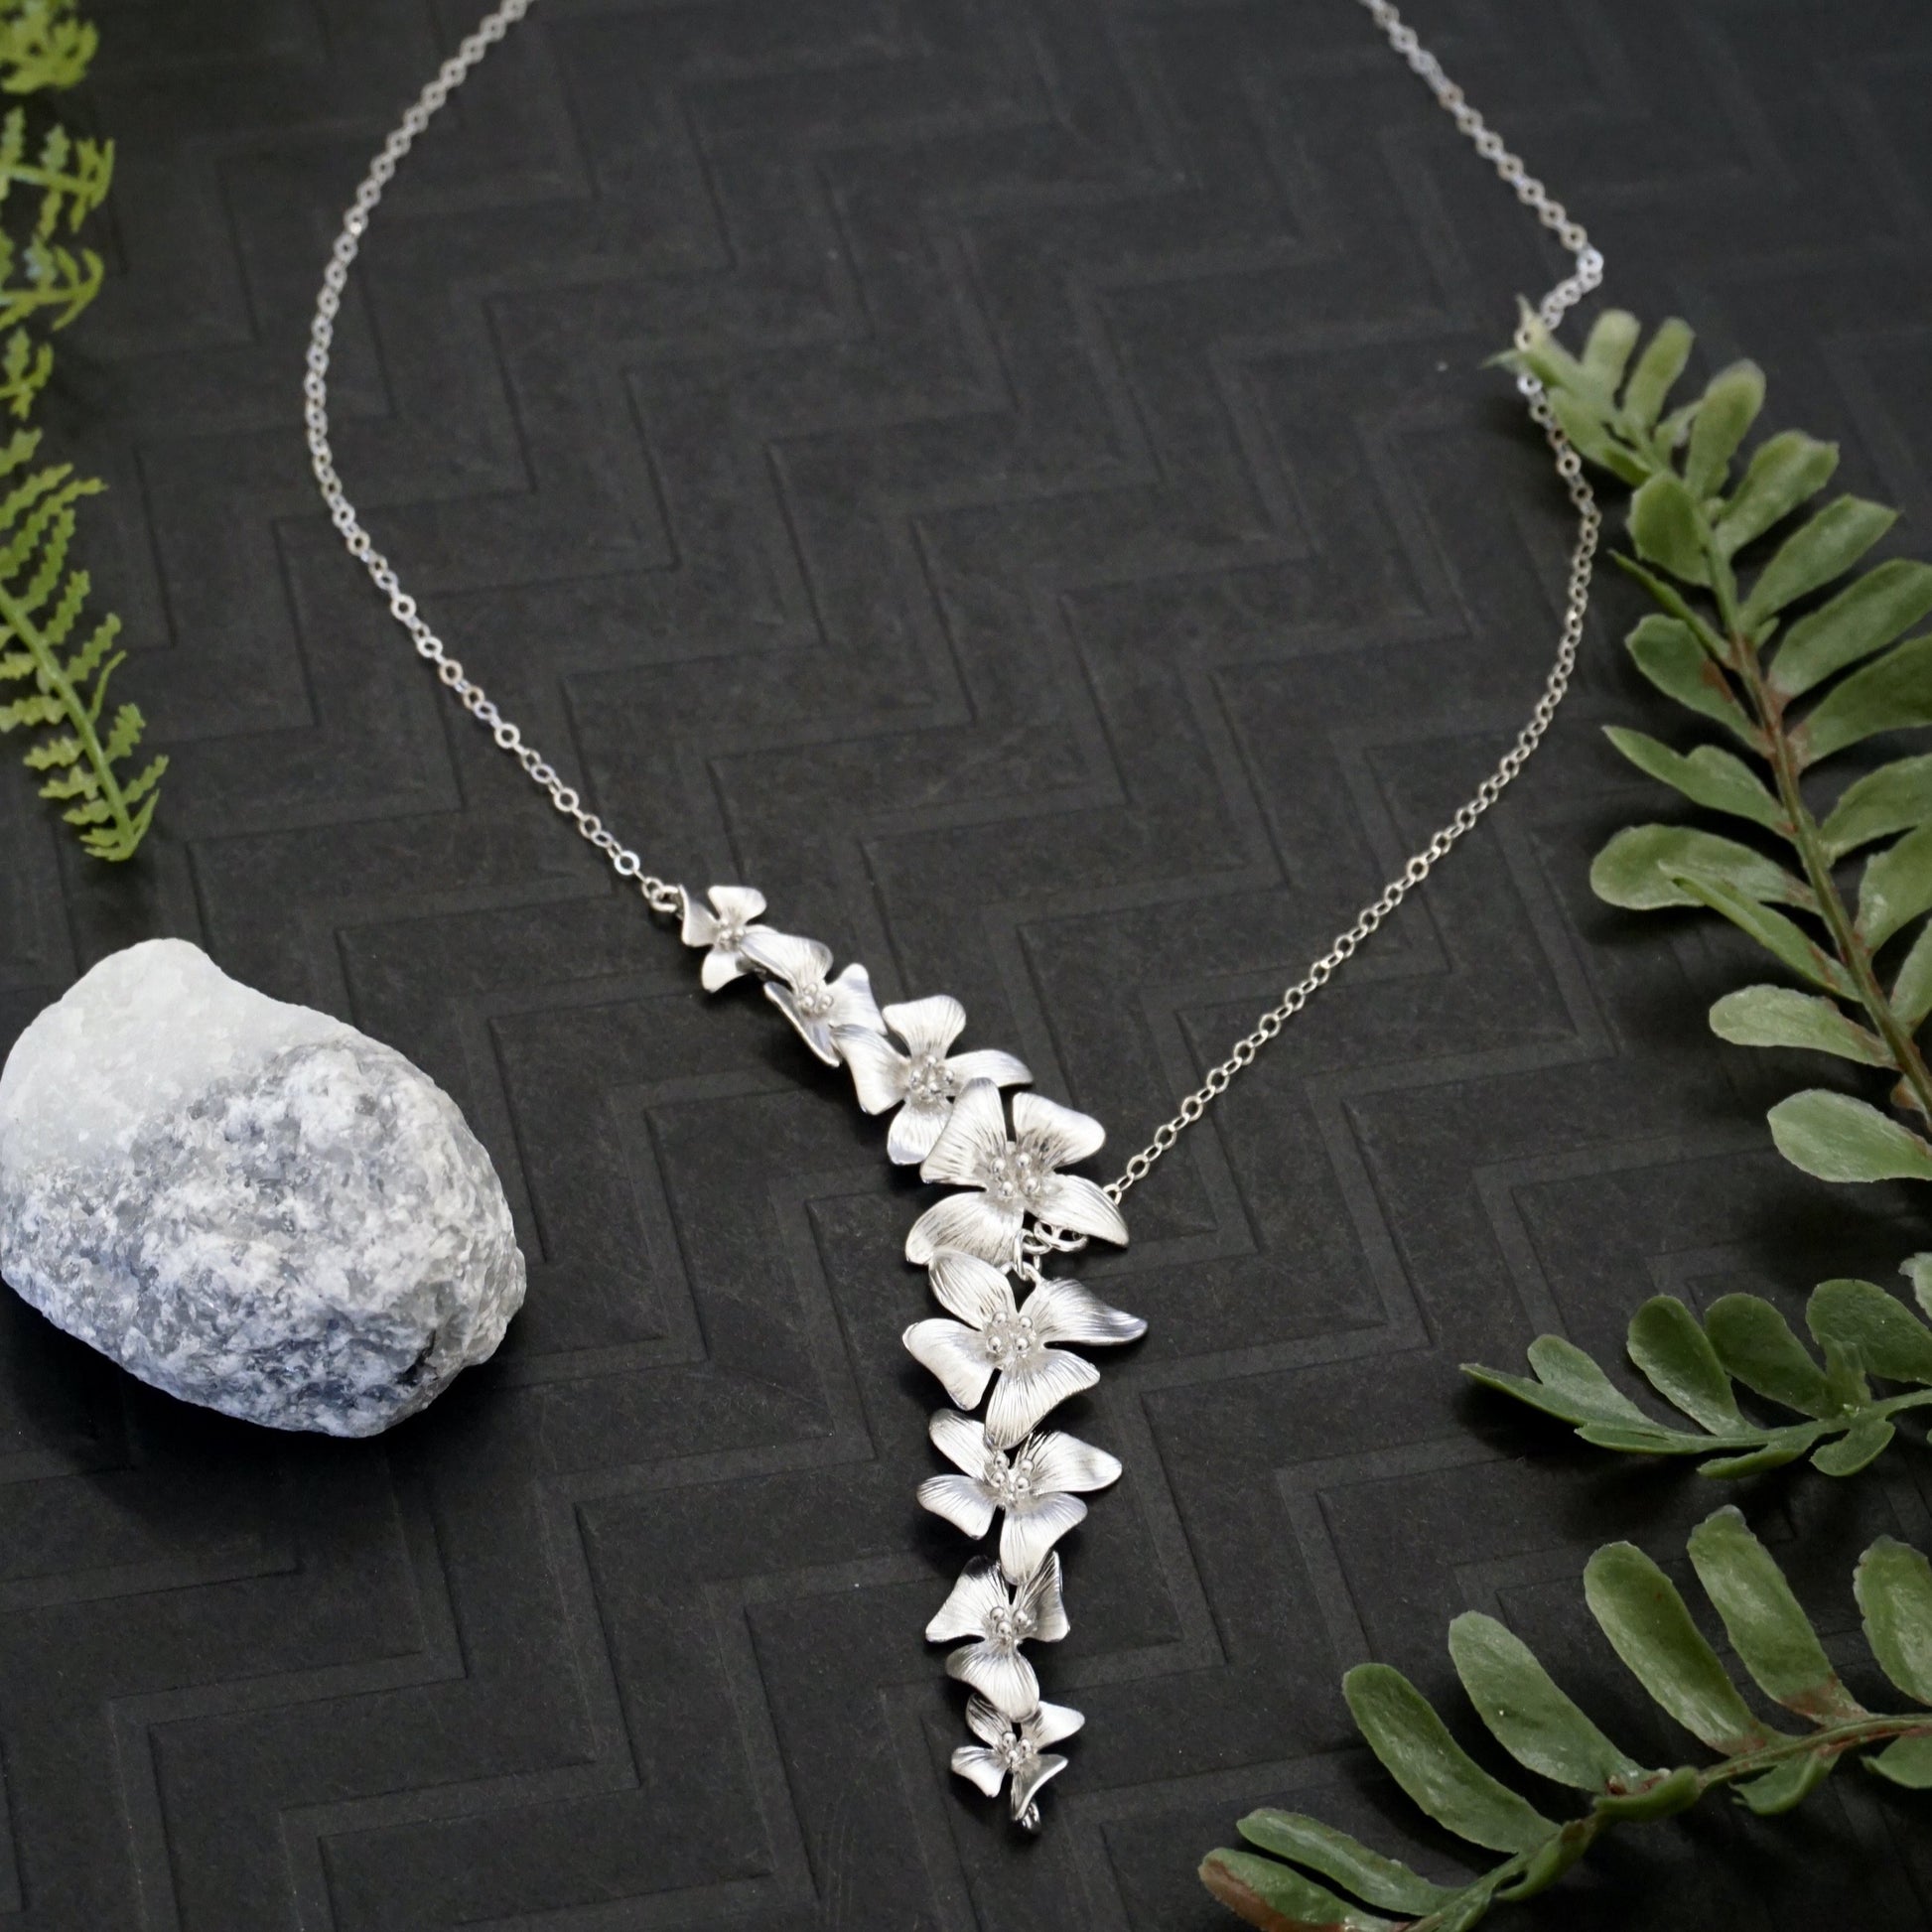 Silver dogwood flower necklace